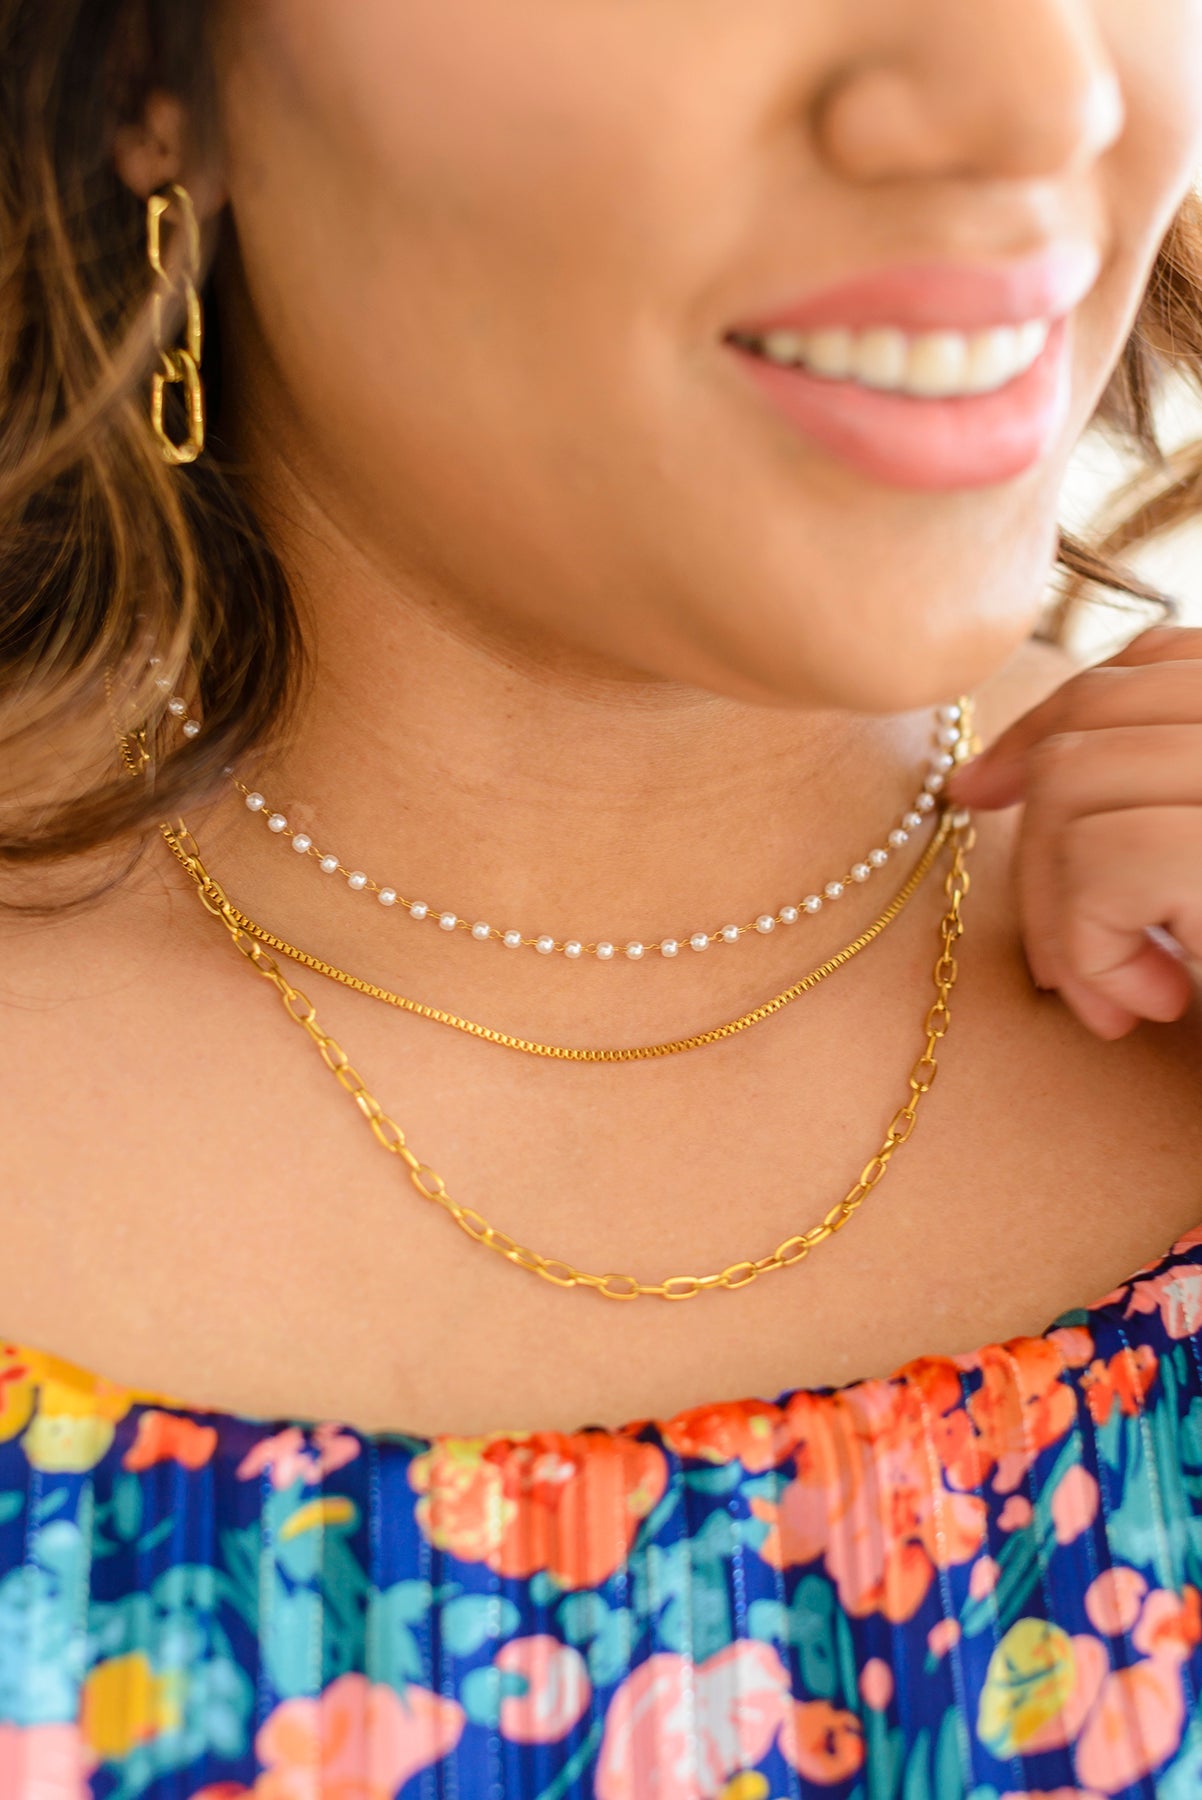 Waterproof Jewelry: Triple Threat Layered Necklace